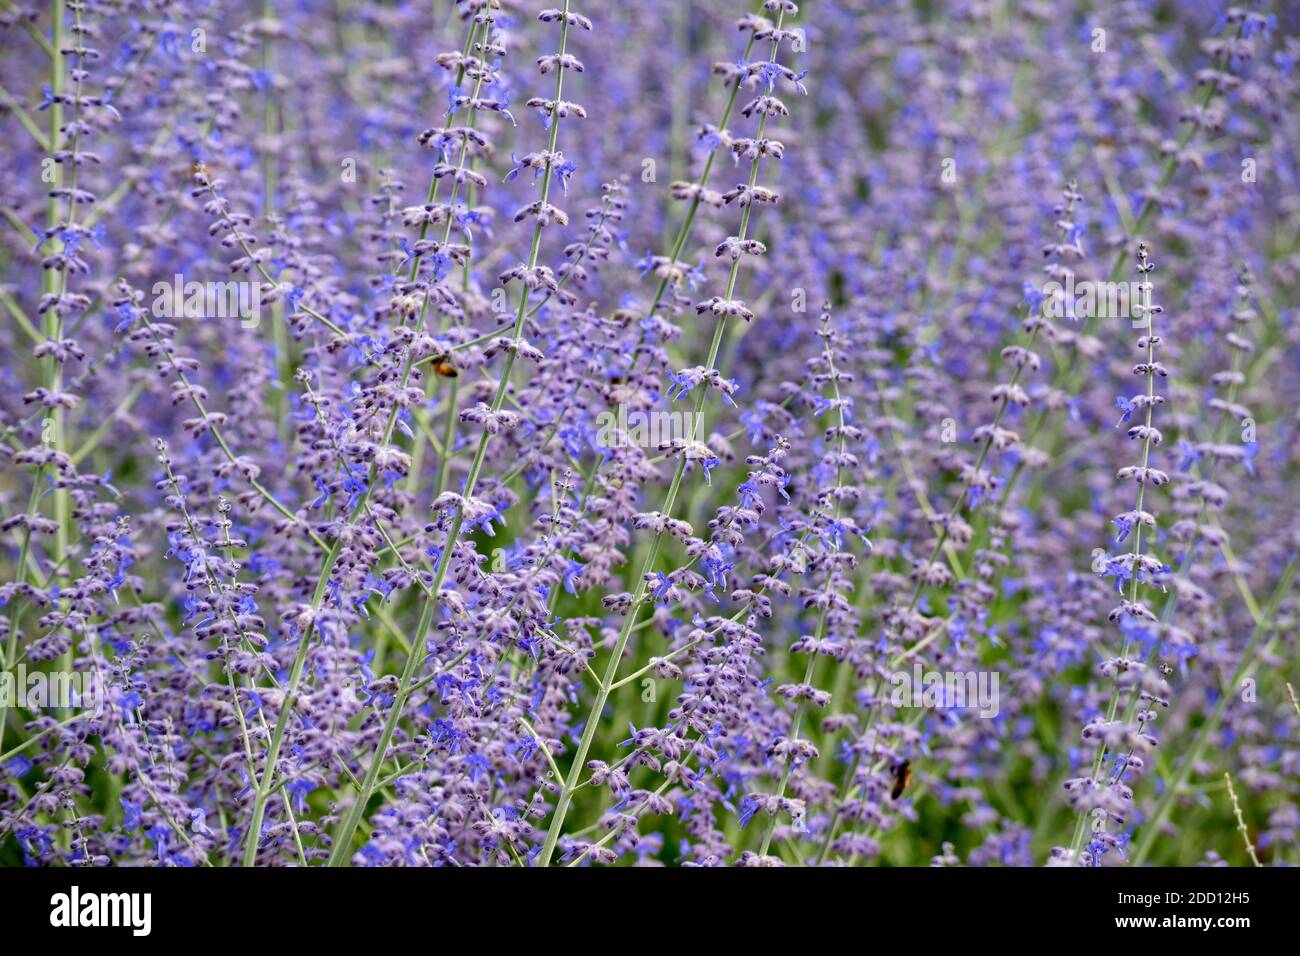 Englisch Lavendel Vera Wedel, Lavandula Angustifolia Vera. Stockfoto